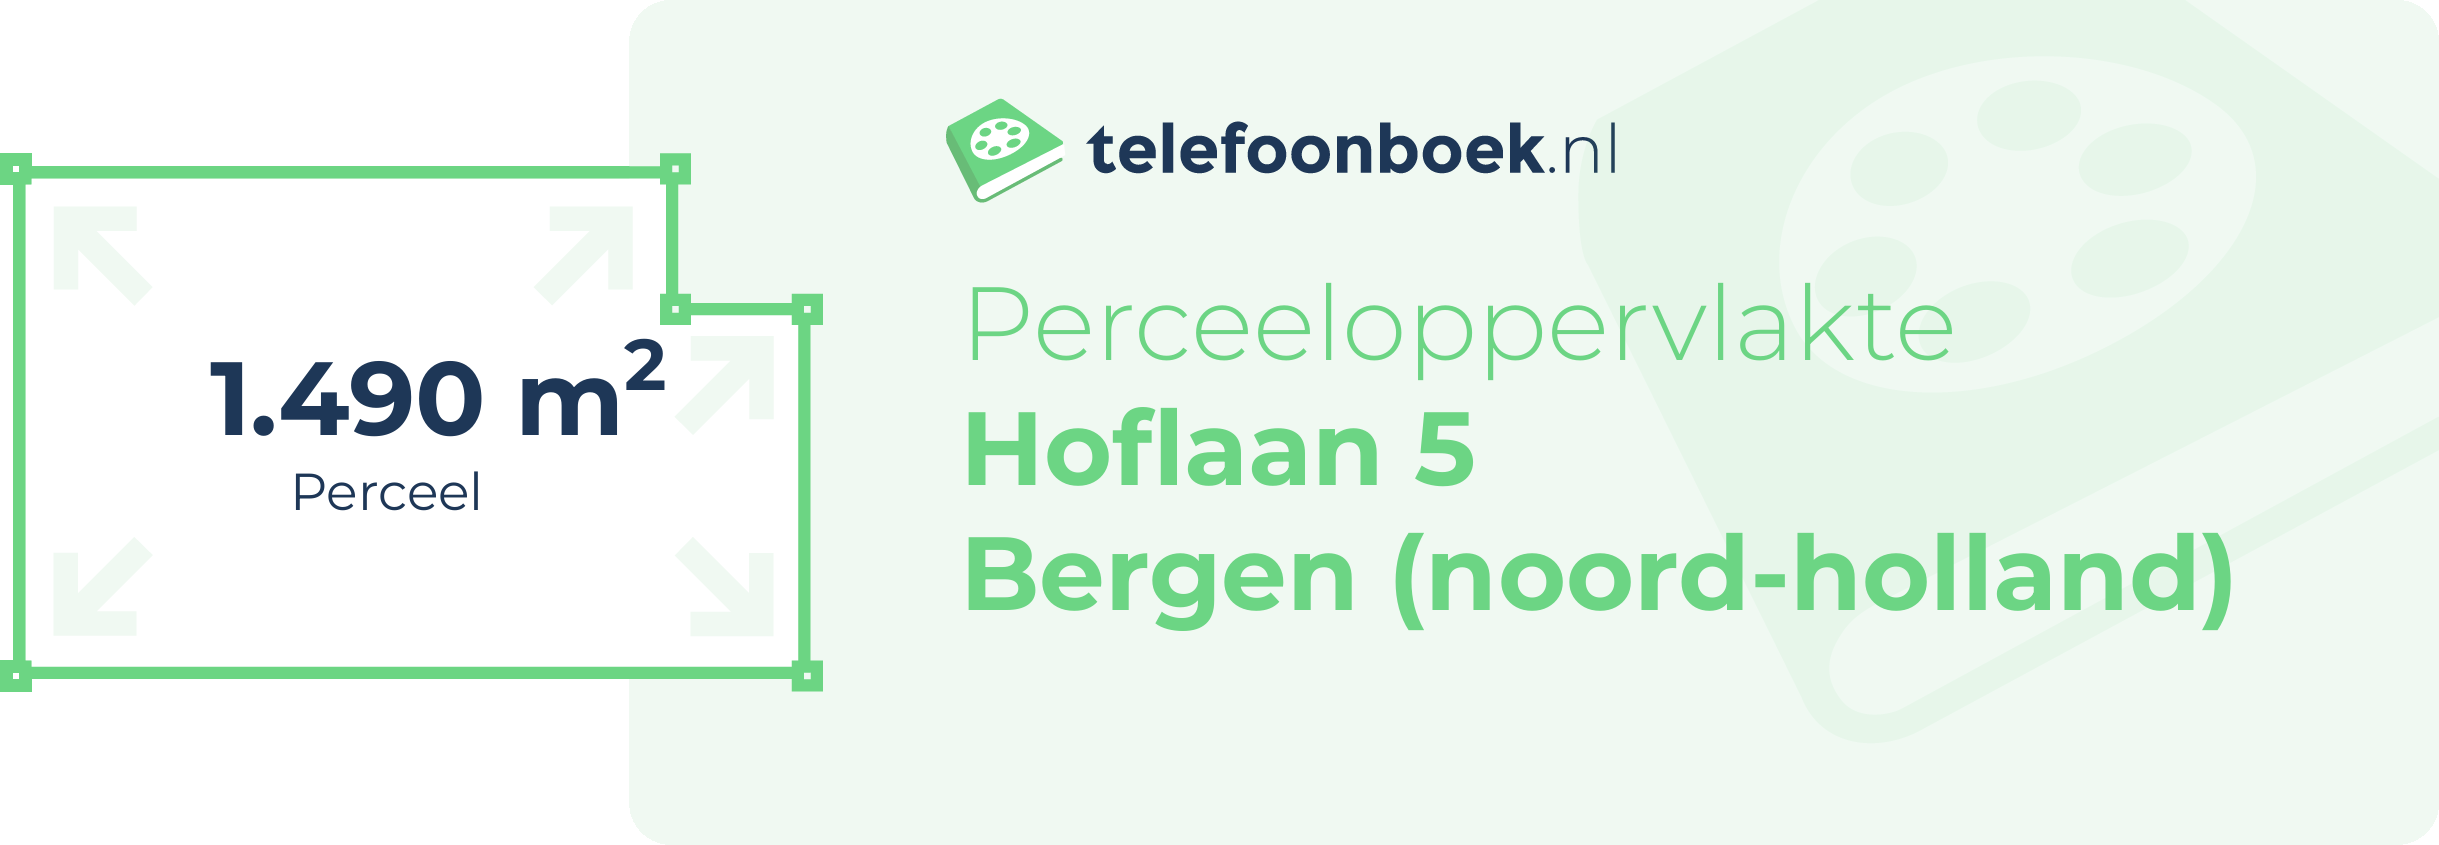 Perceeloppervlakte Hoflaan 5 Bergen (Noord-Holland)